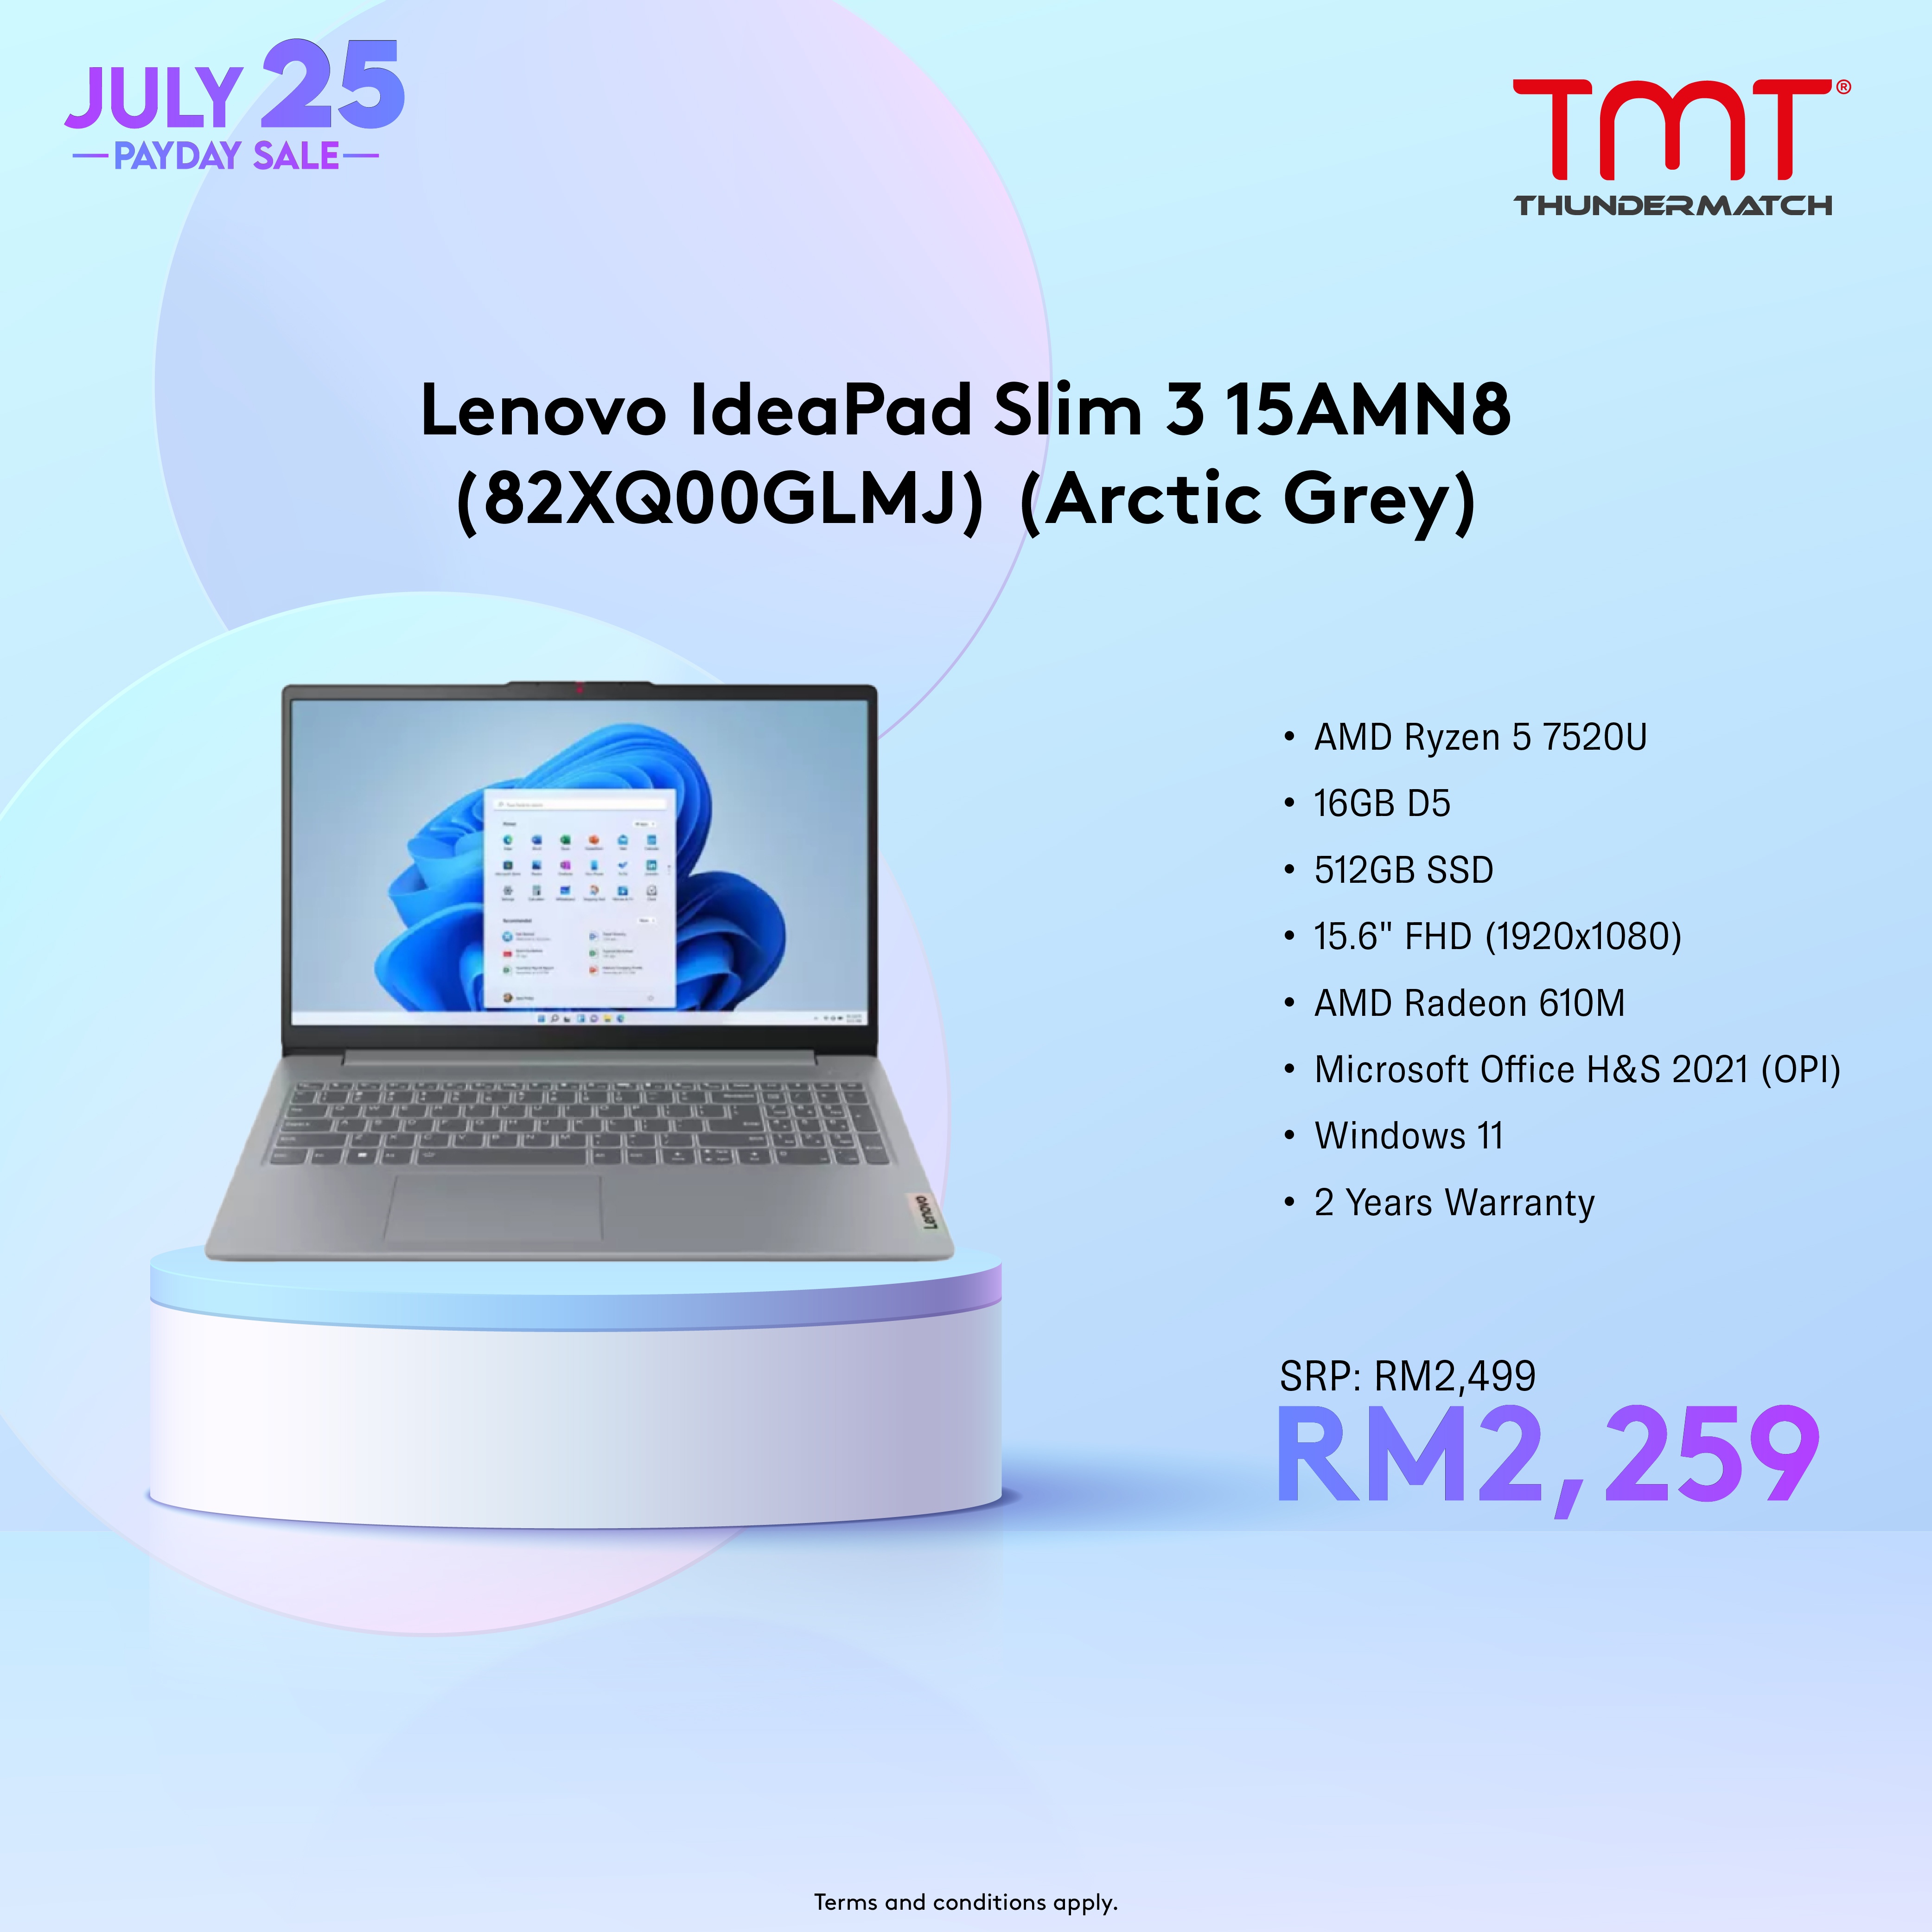 Lenovo IdeaPad Slim 3 15AMN8 (82XQ00GJMJ/82XQ00GLMJ) | AMD Ryzen 5 7520U | 16GB RAM 512GB SSD | 15.6" FHD(1920x1080) | AMD Radeon 610M | MS Office H&S 2021 | Win11 | 2Y Warranty